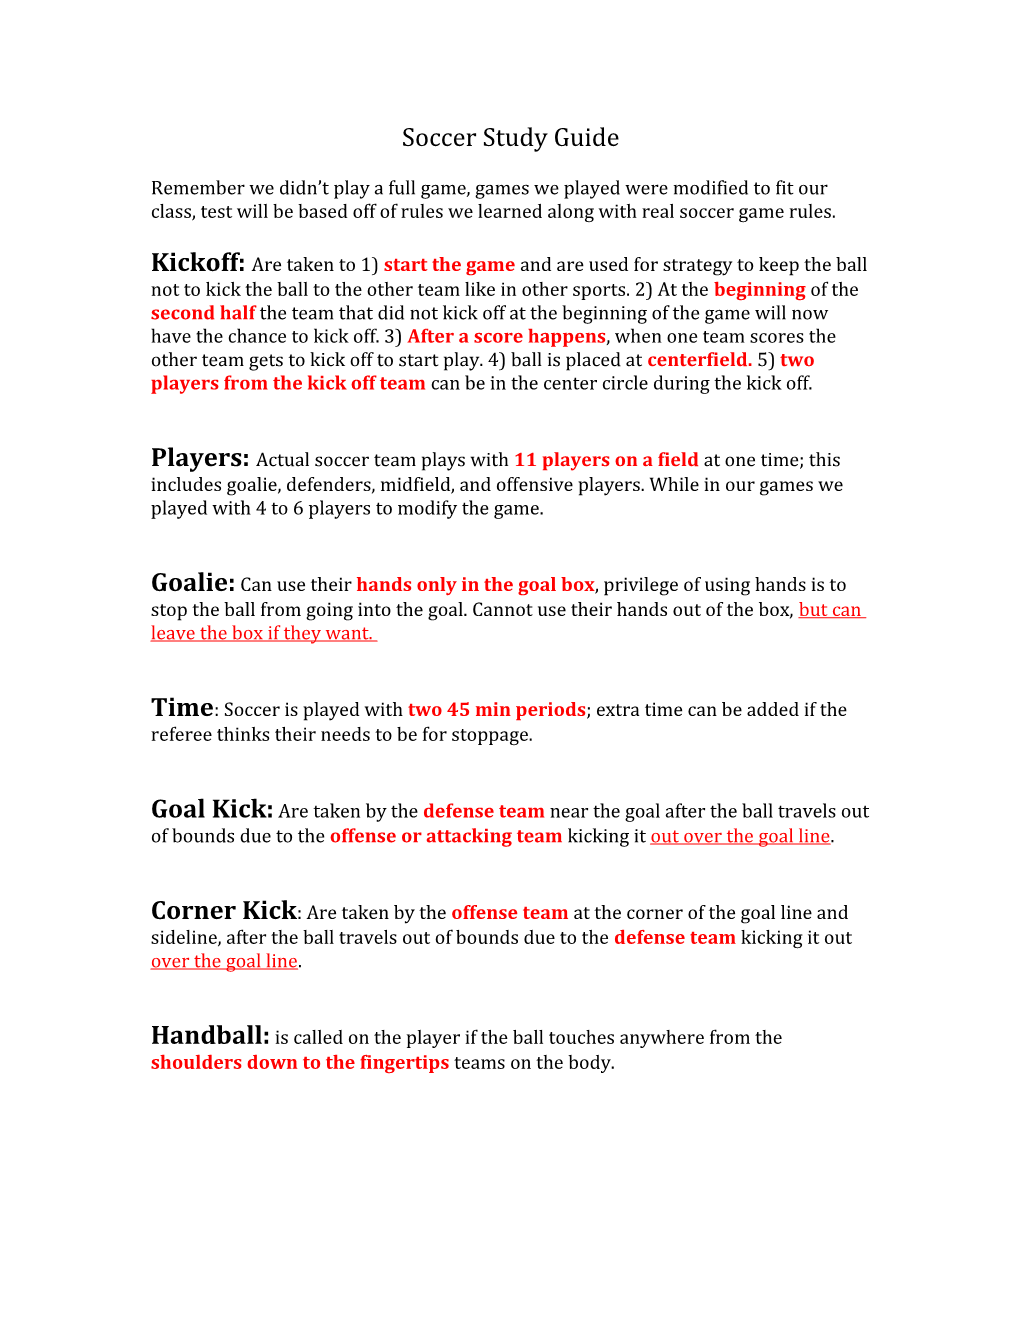 Soccer Study Guide s3